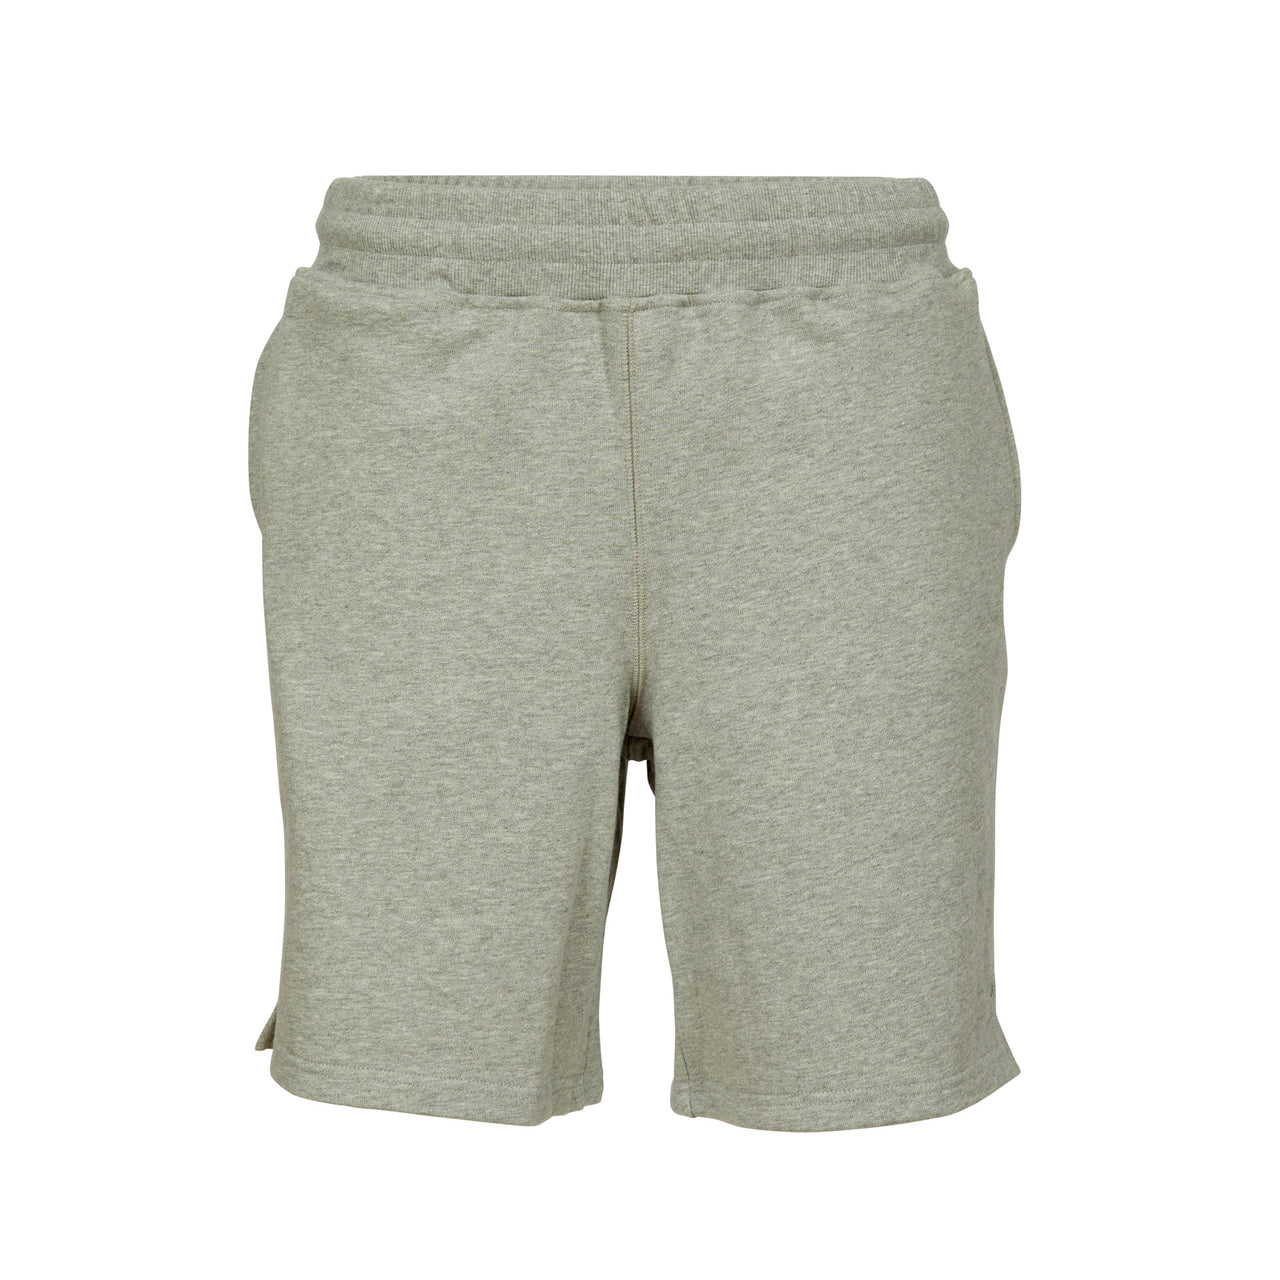 Bucks Casual Grant Shorts Grey